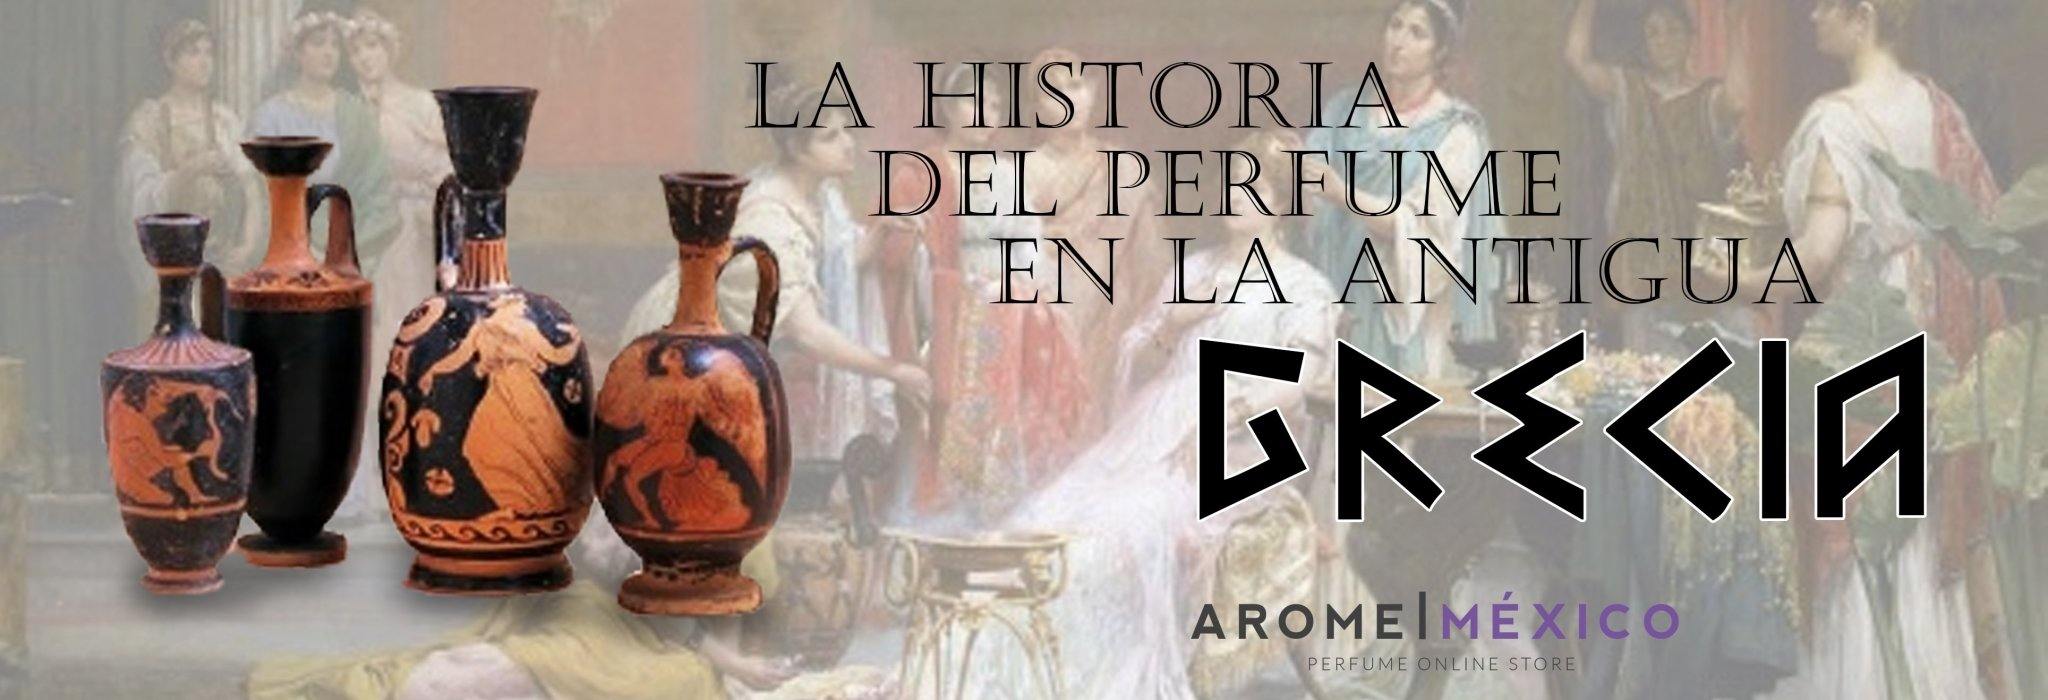 La historia del perfume en la antigua Grecia